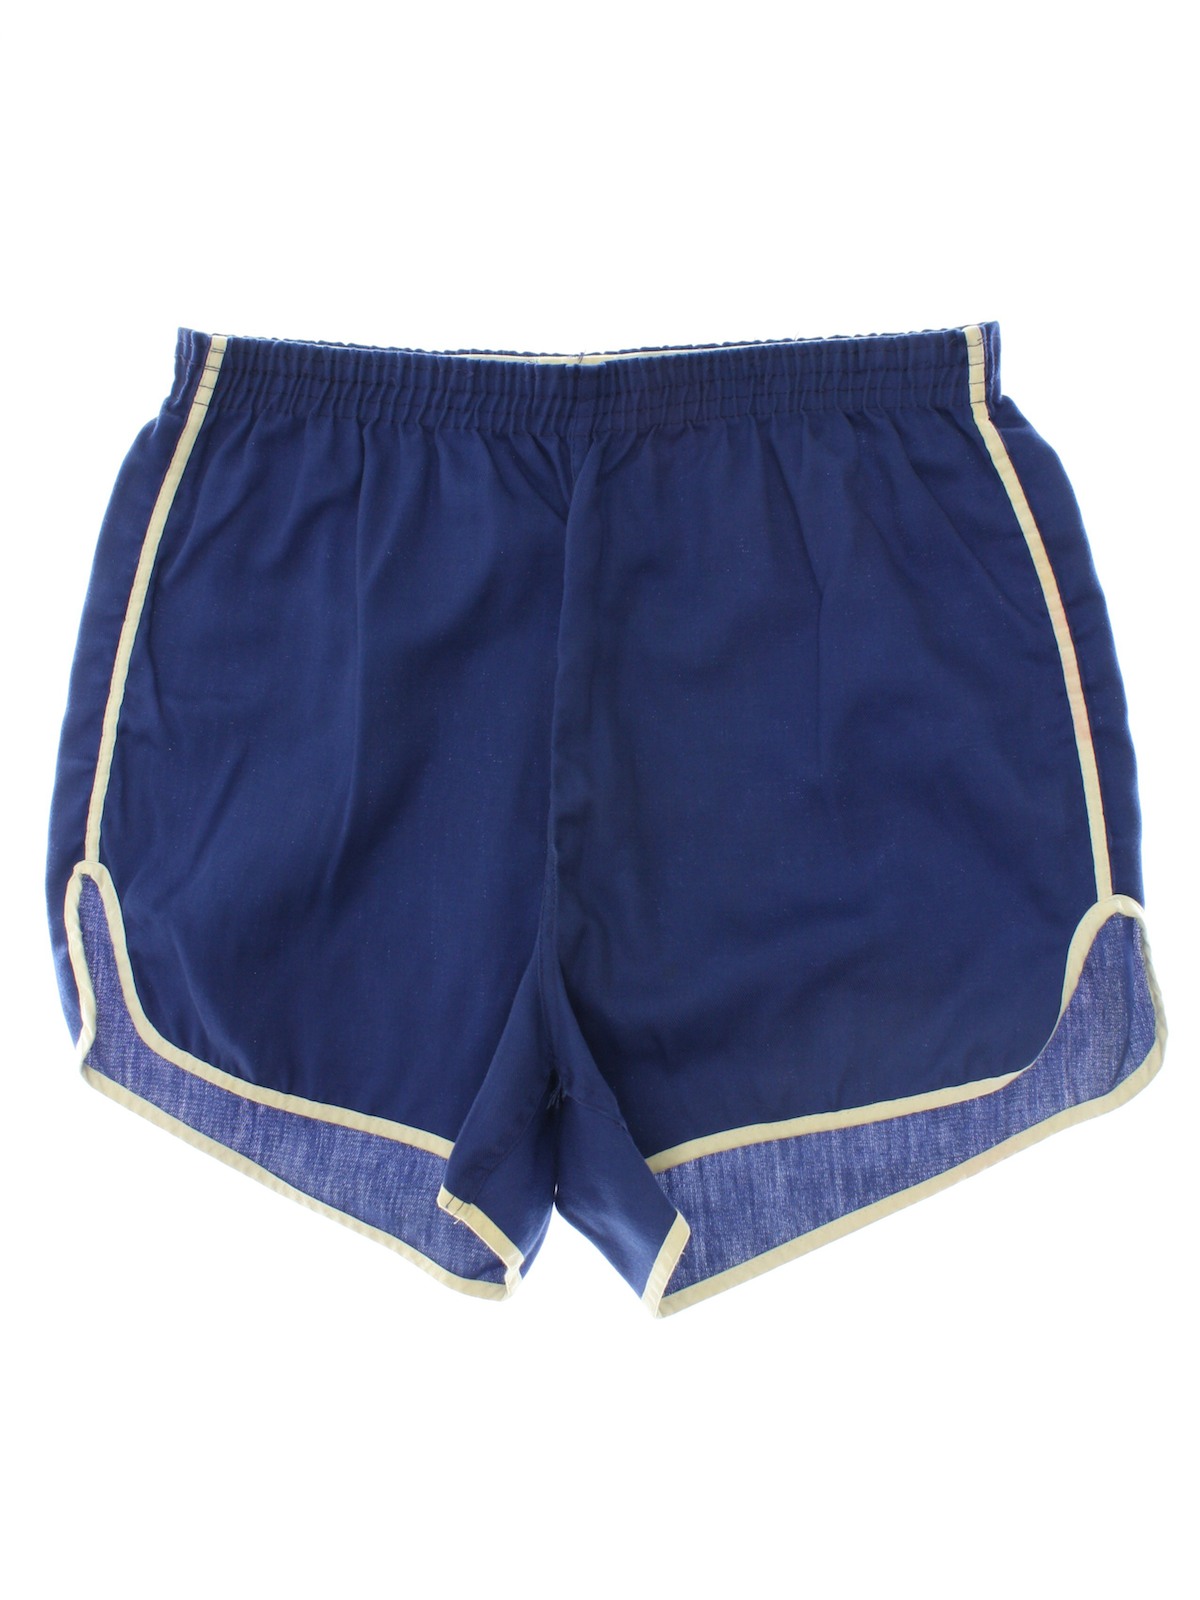 Vintage Gym Shorts 1980s Shorts: 80s -Gym Shorts- Mens blue background ...